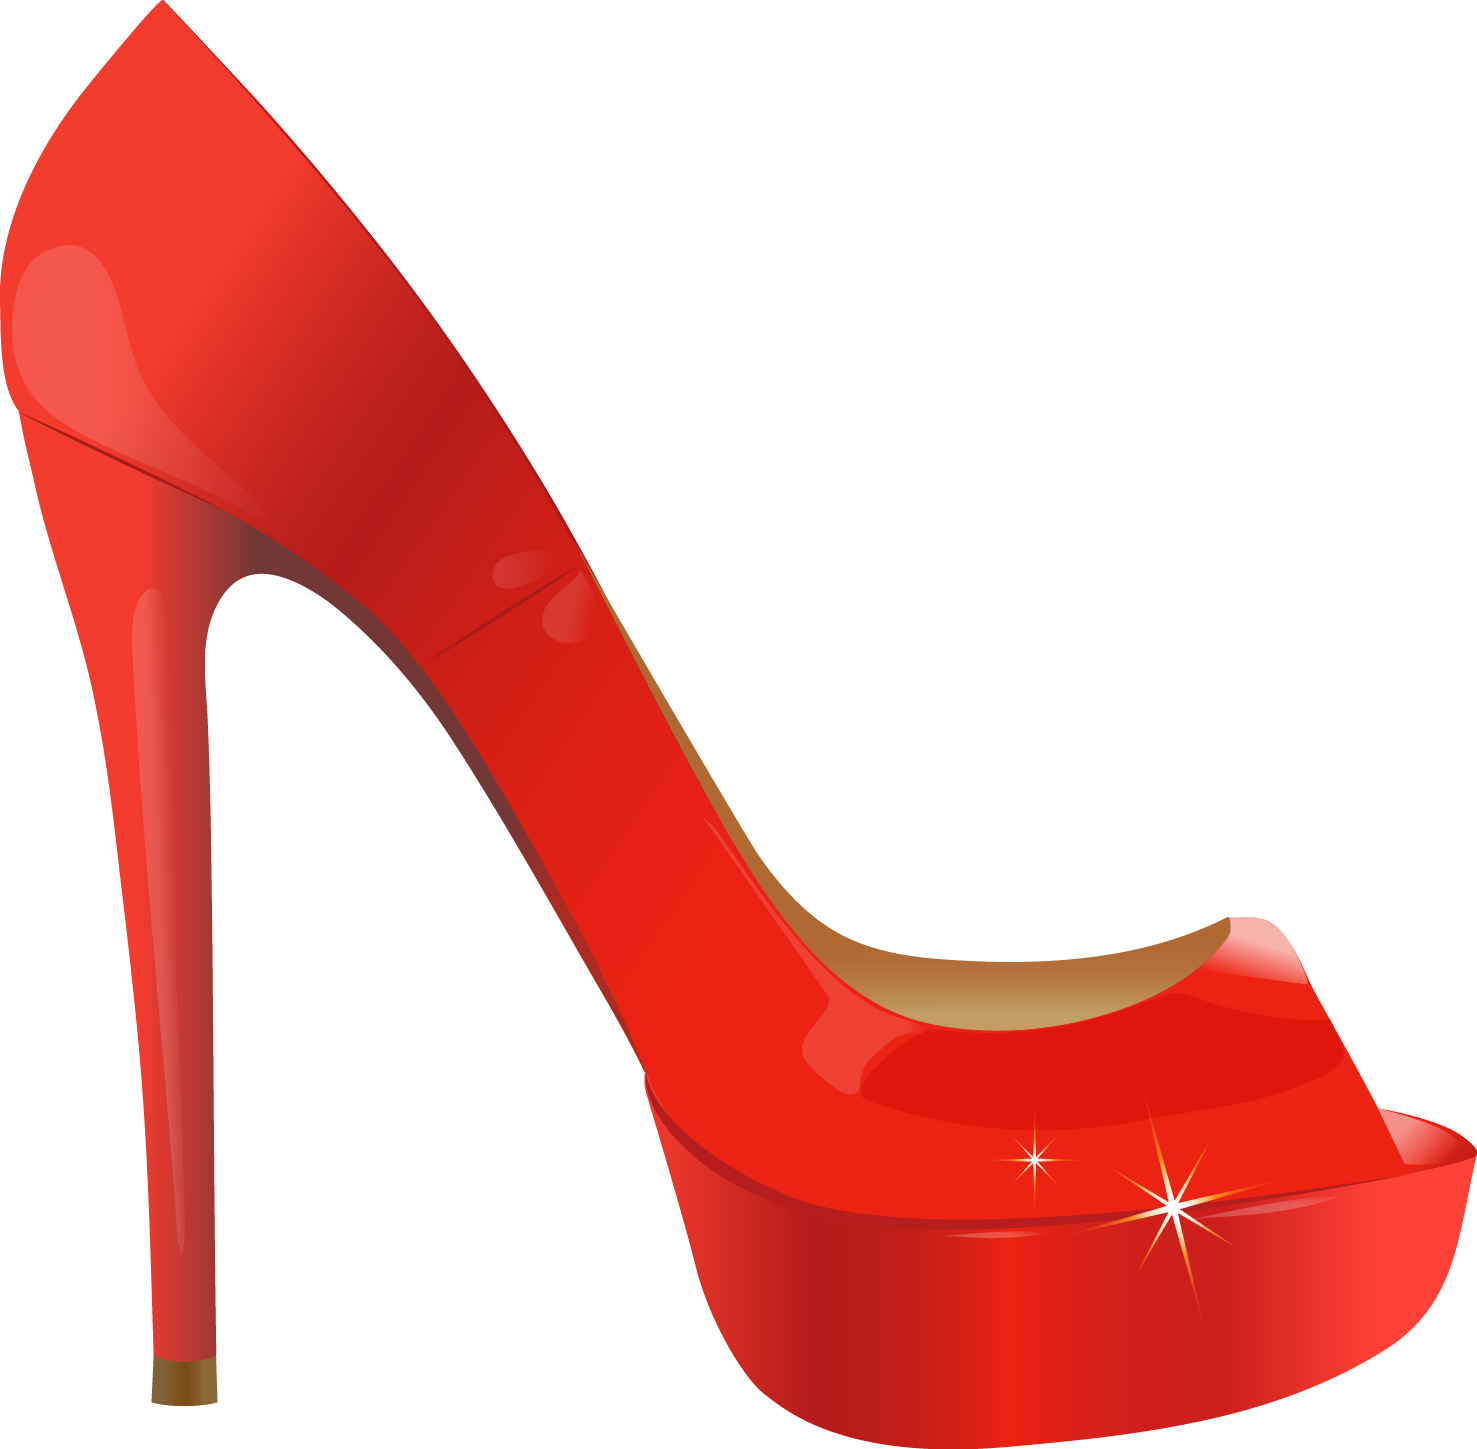 Red High-heeled Footwear - Shoe (1477x1449)